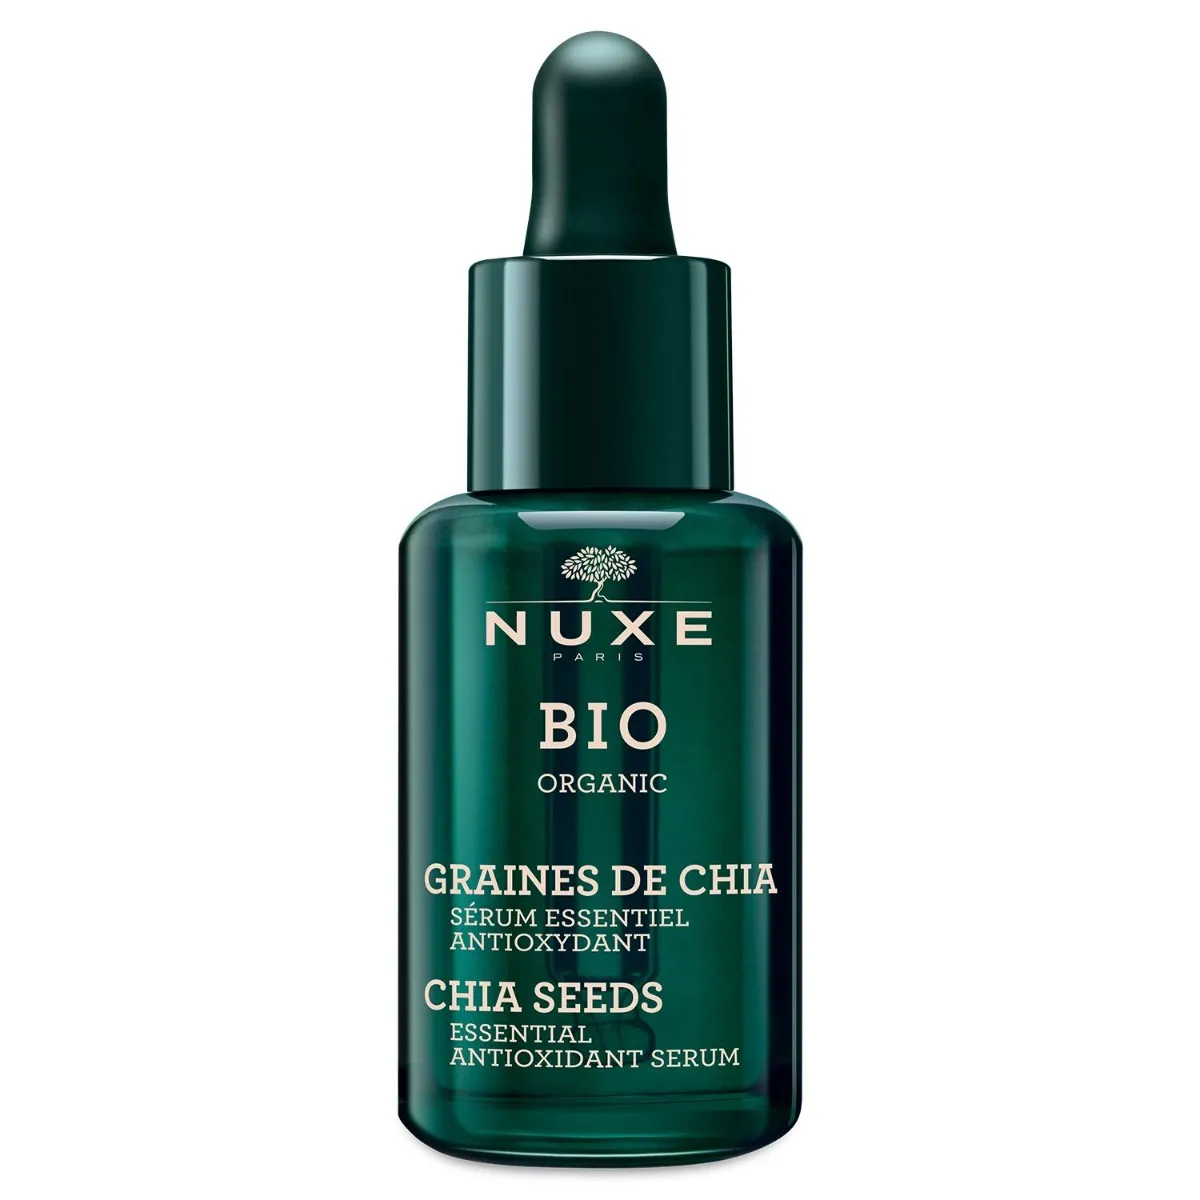 Nuxe Bio, esencjonalne serum antyoksydacyjne, nasiona chia, 30 ml 